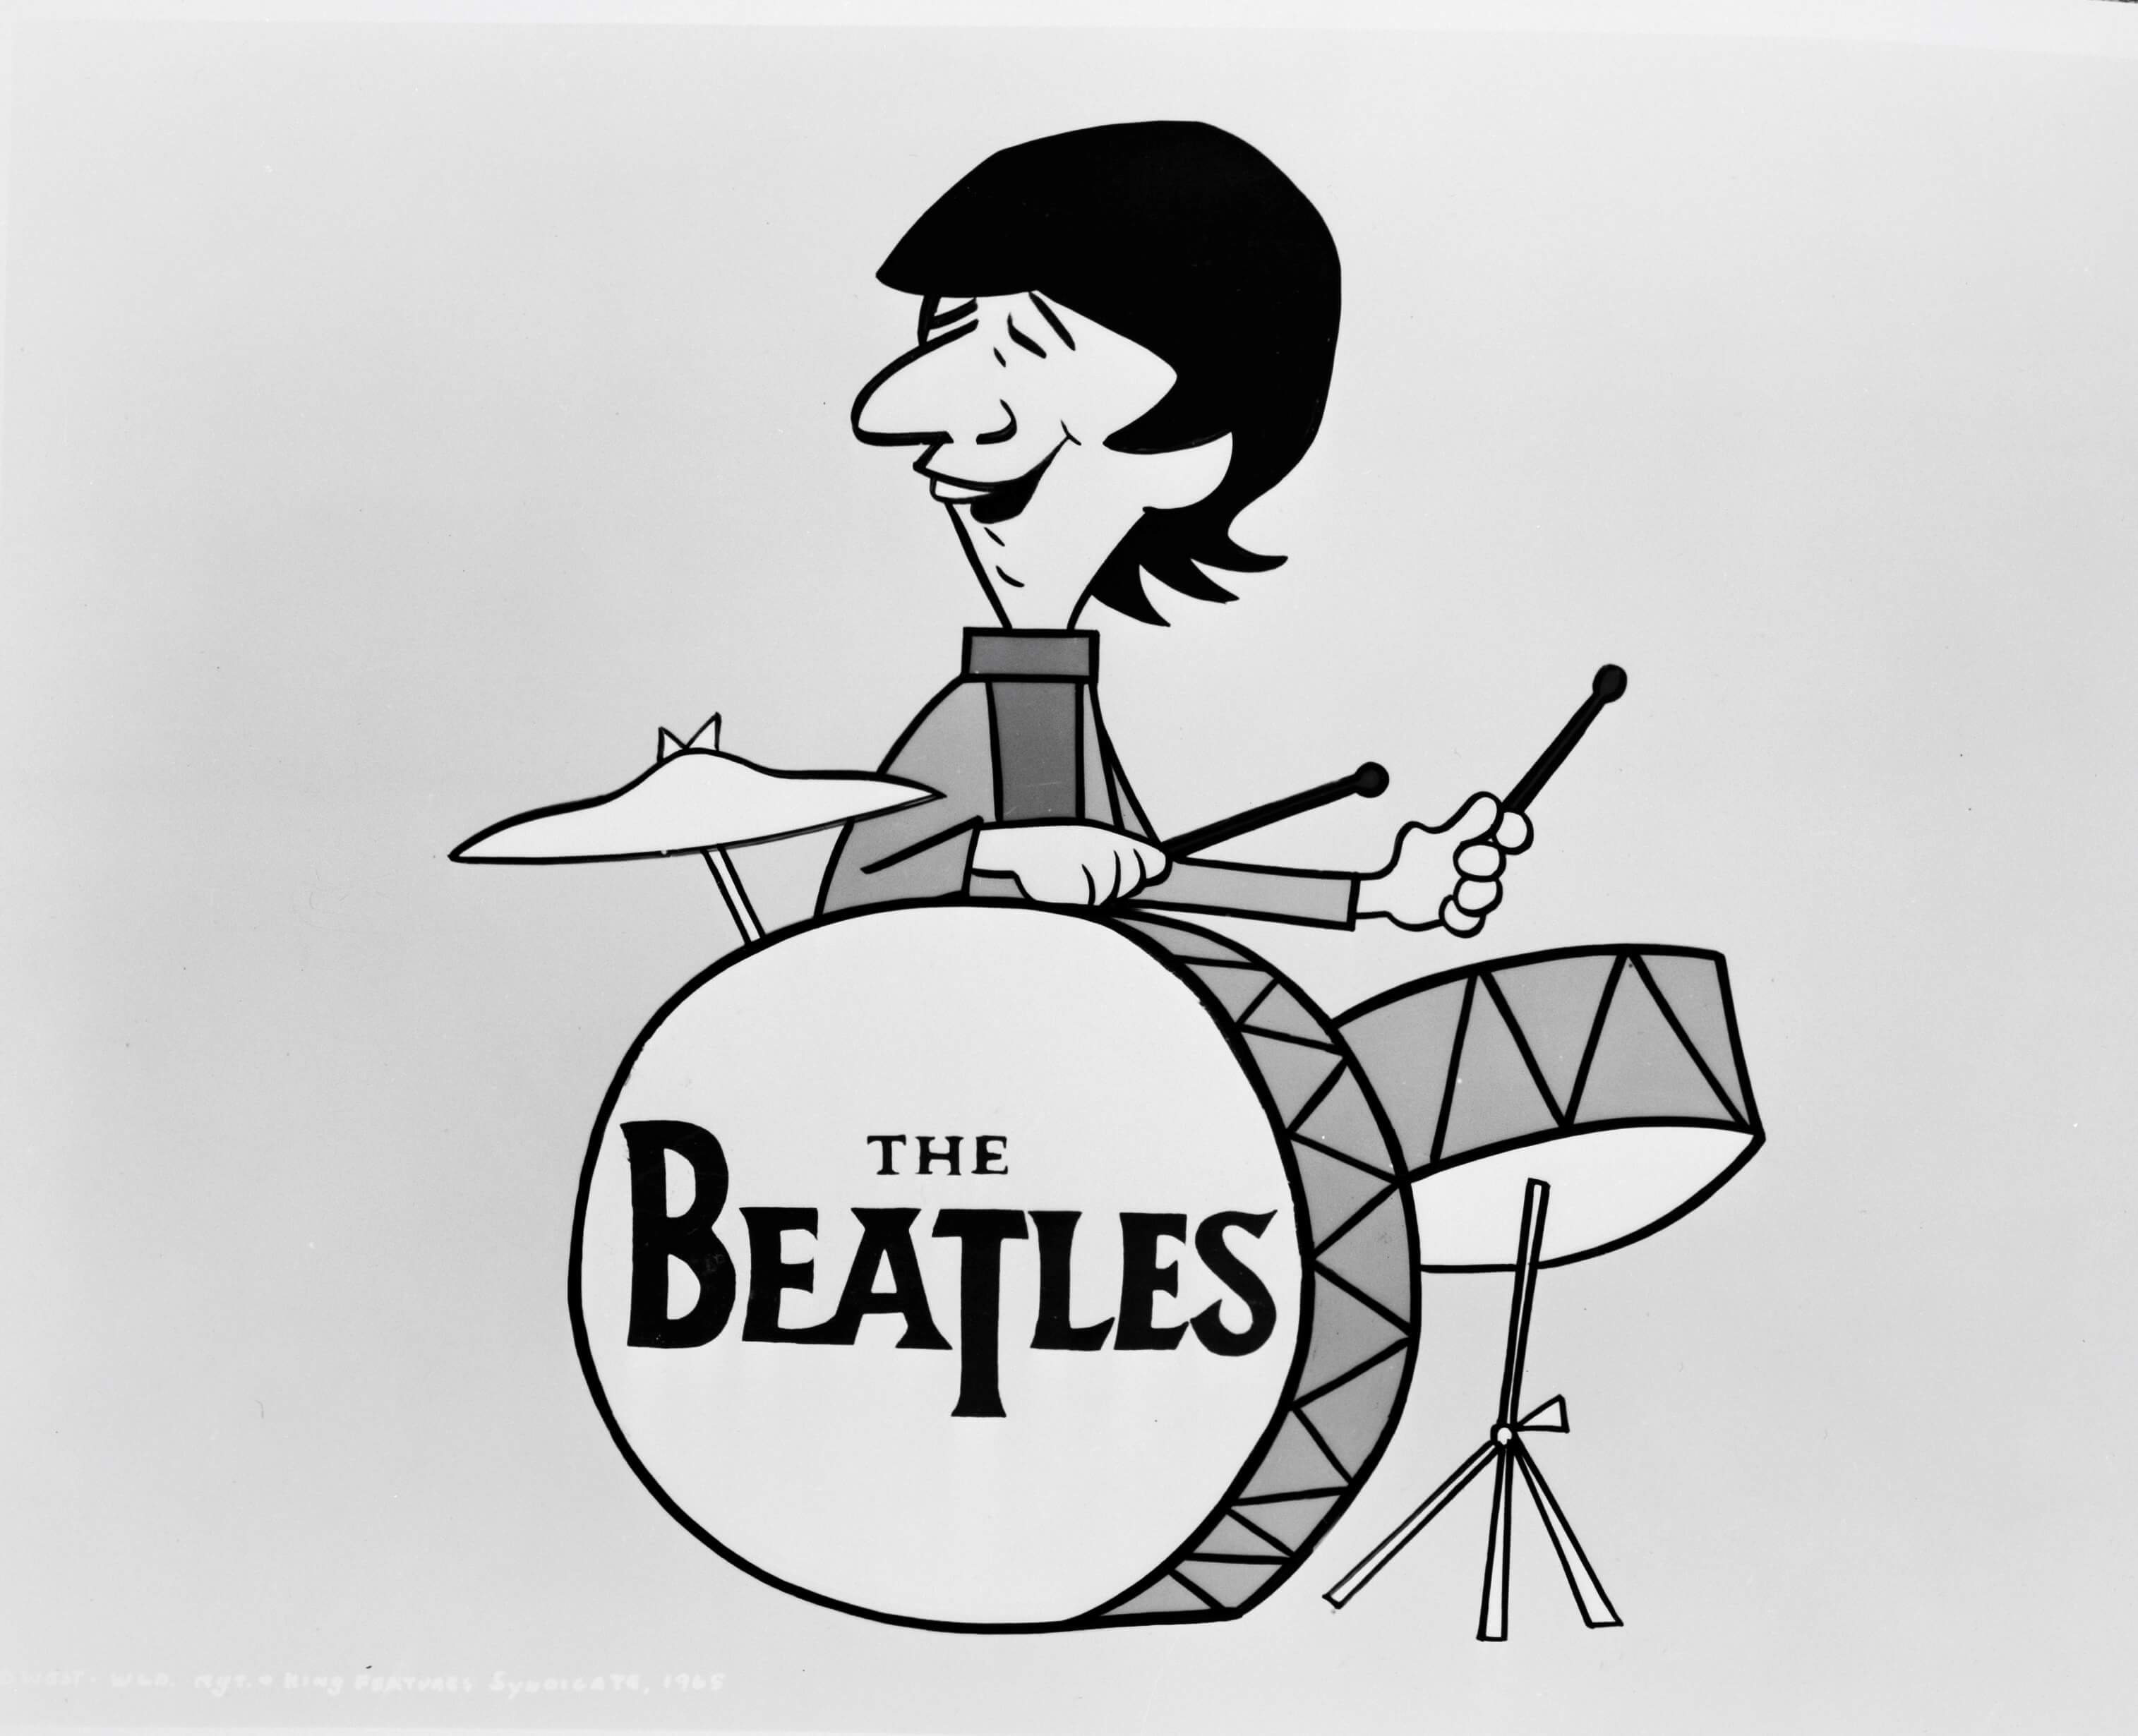 "No No Song" singer Ringo Starr as a cartoon character